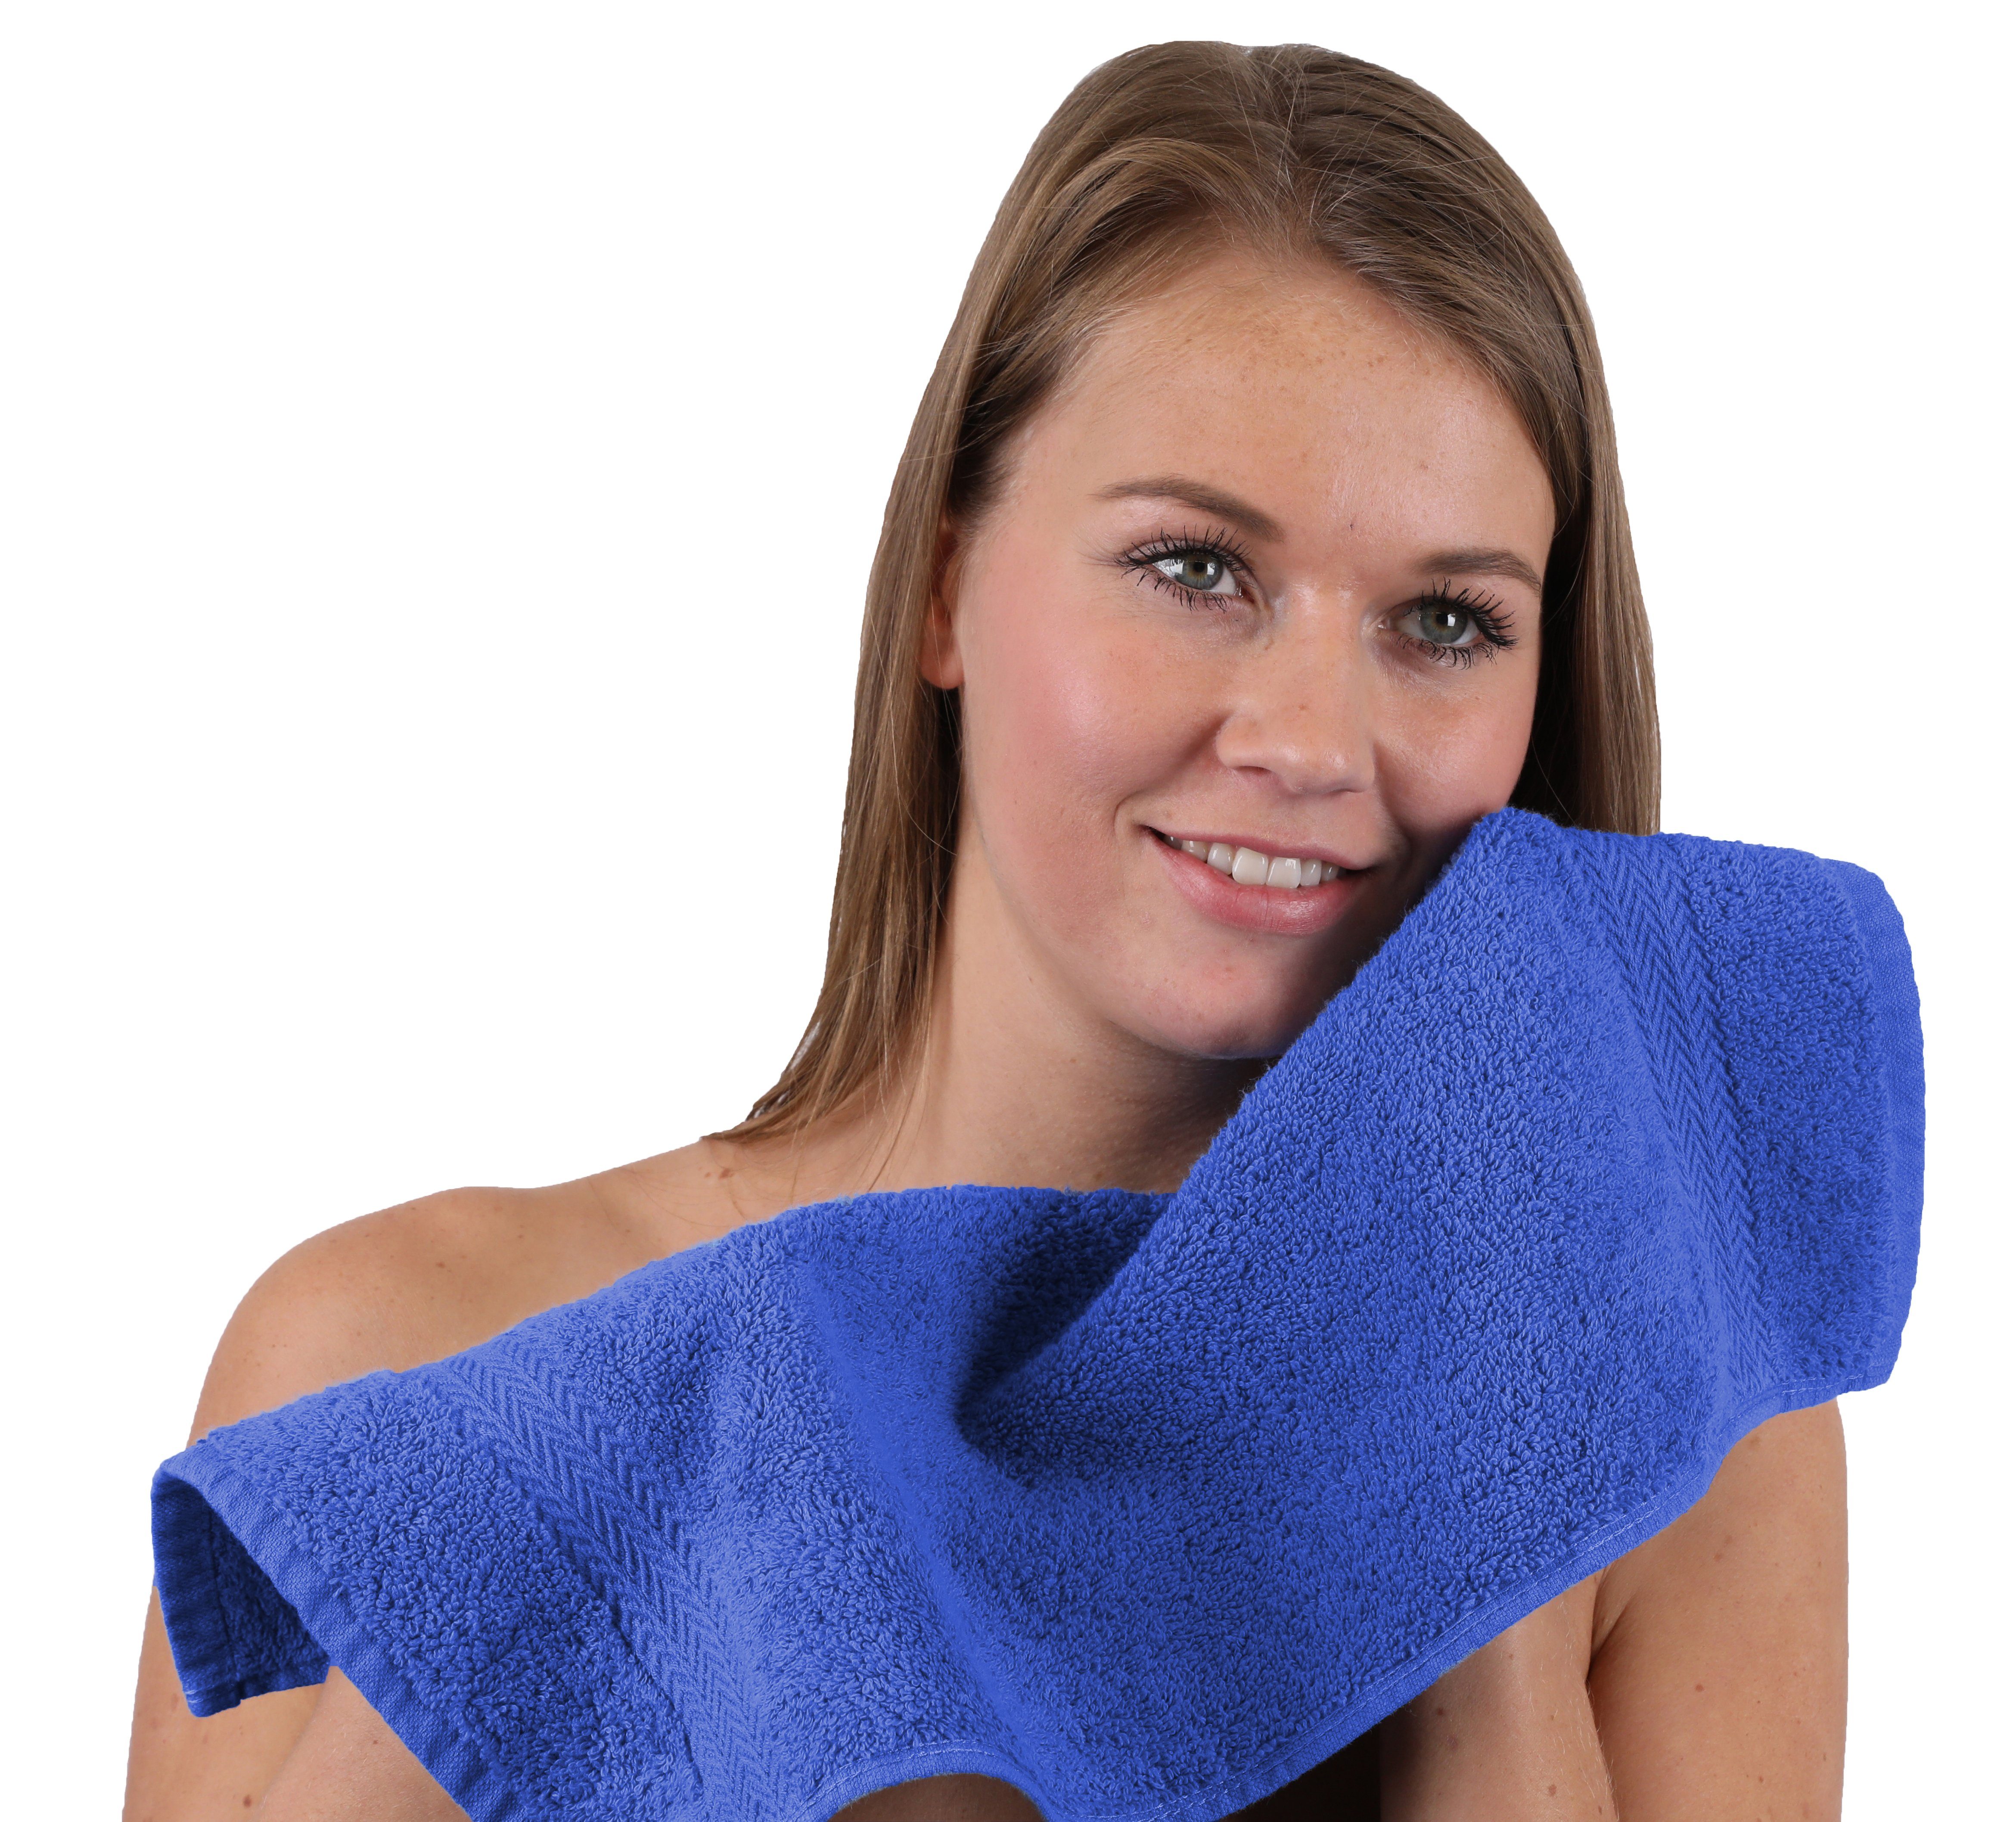 100% Blau 2 100% Duschtücher Set Royal Farbe Altrosa, Handtuch 2 & Handtuch-Set Premium 10-TLG. Baumwolle, Betz Waschhandschuhe Handtücher 4 Gästetücher 2 Baumwolle (10-tlg)